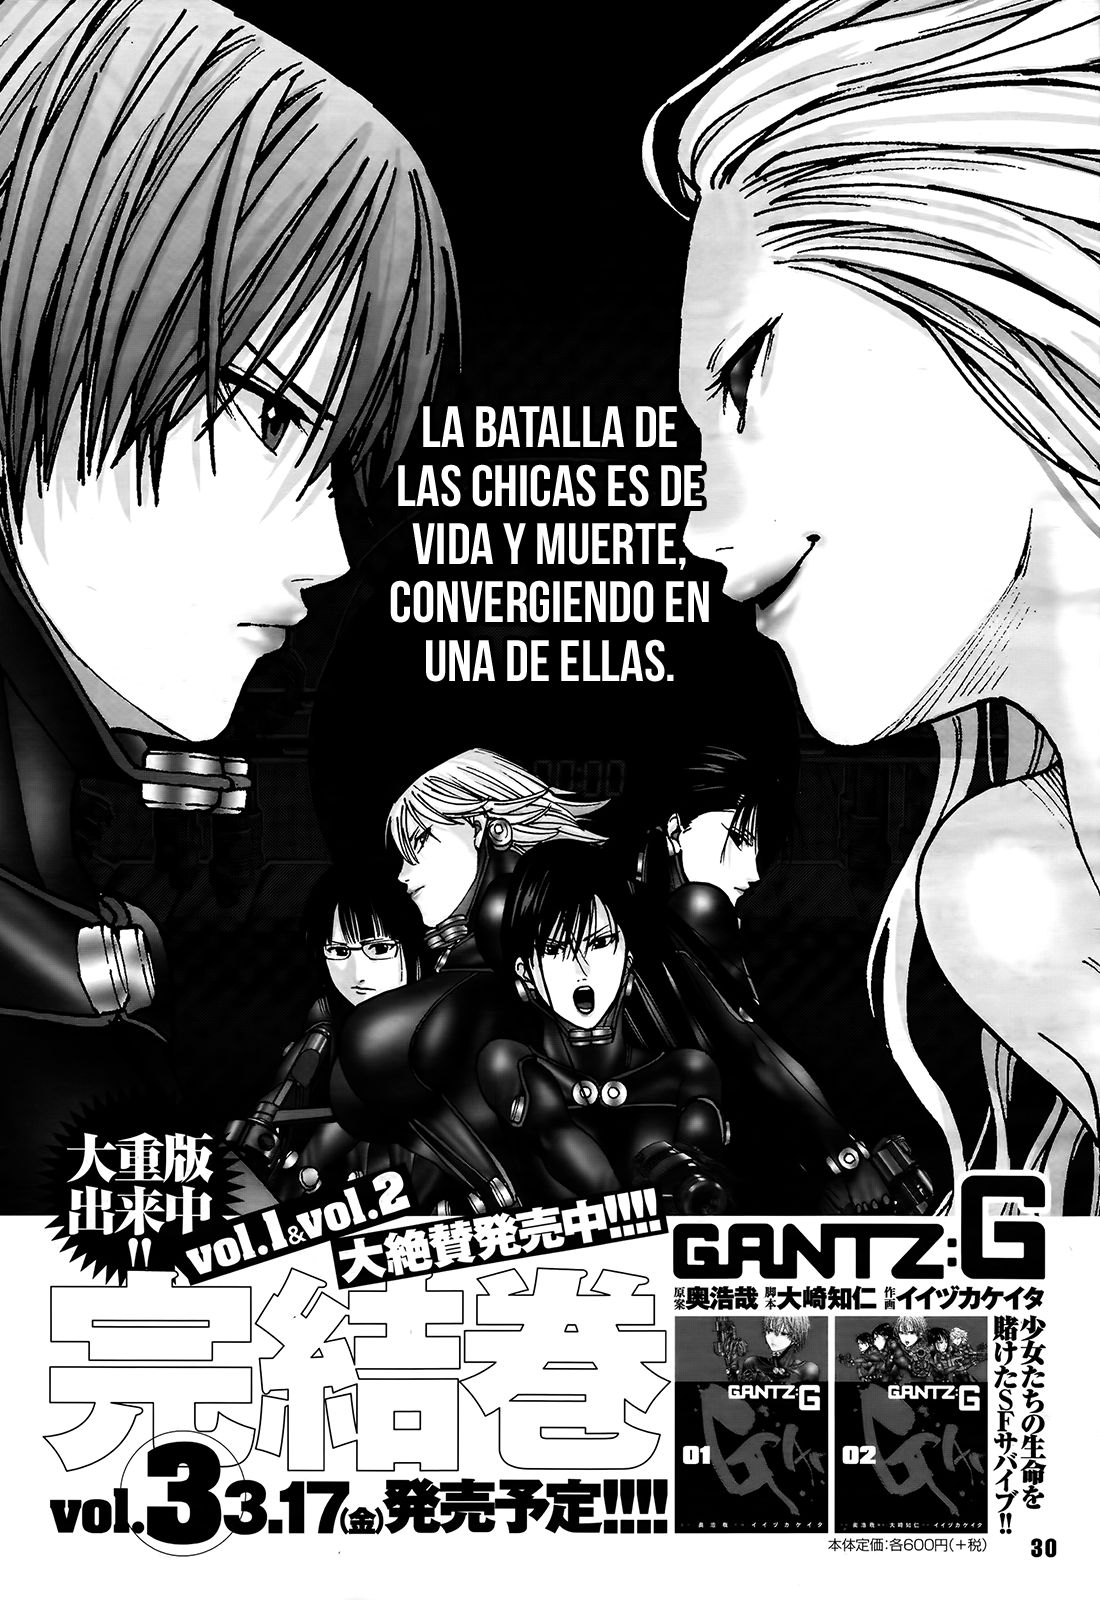 Mangadoor Gantz G 17 Transfiguracion De F Resolucion De K T Co 4pglfclioc Anime Manga Manhwa Gantz Gantzg T Co 5md4owrq29 Twitter